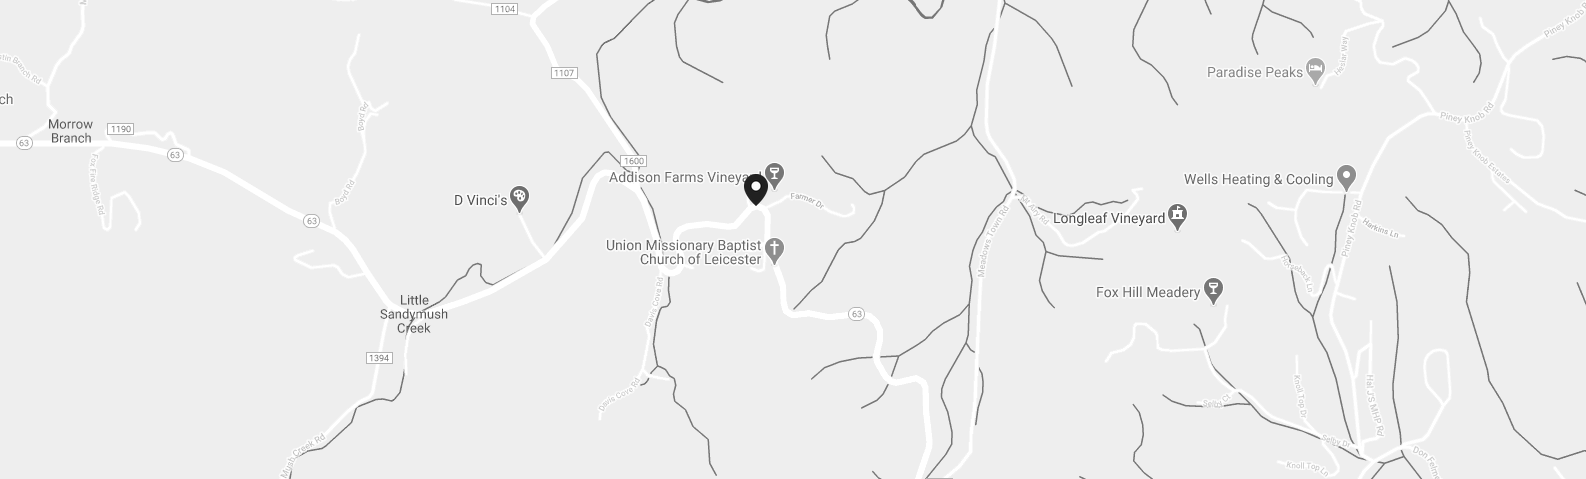 Addison Farms Google Map Directions